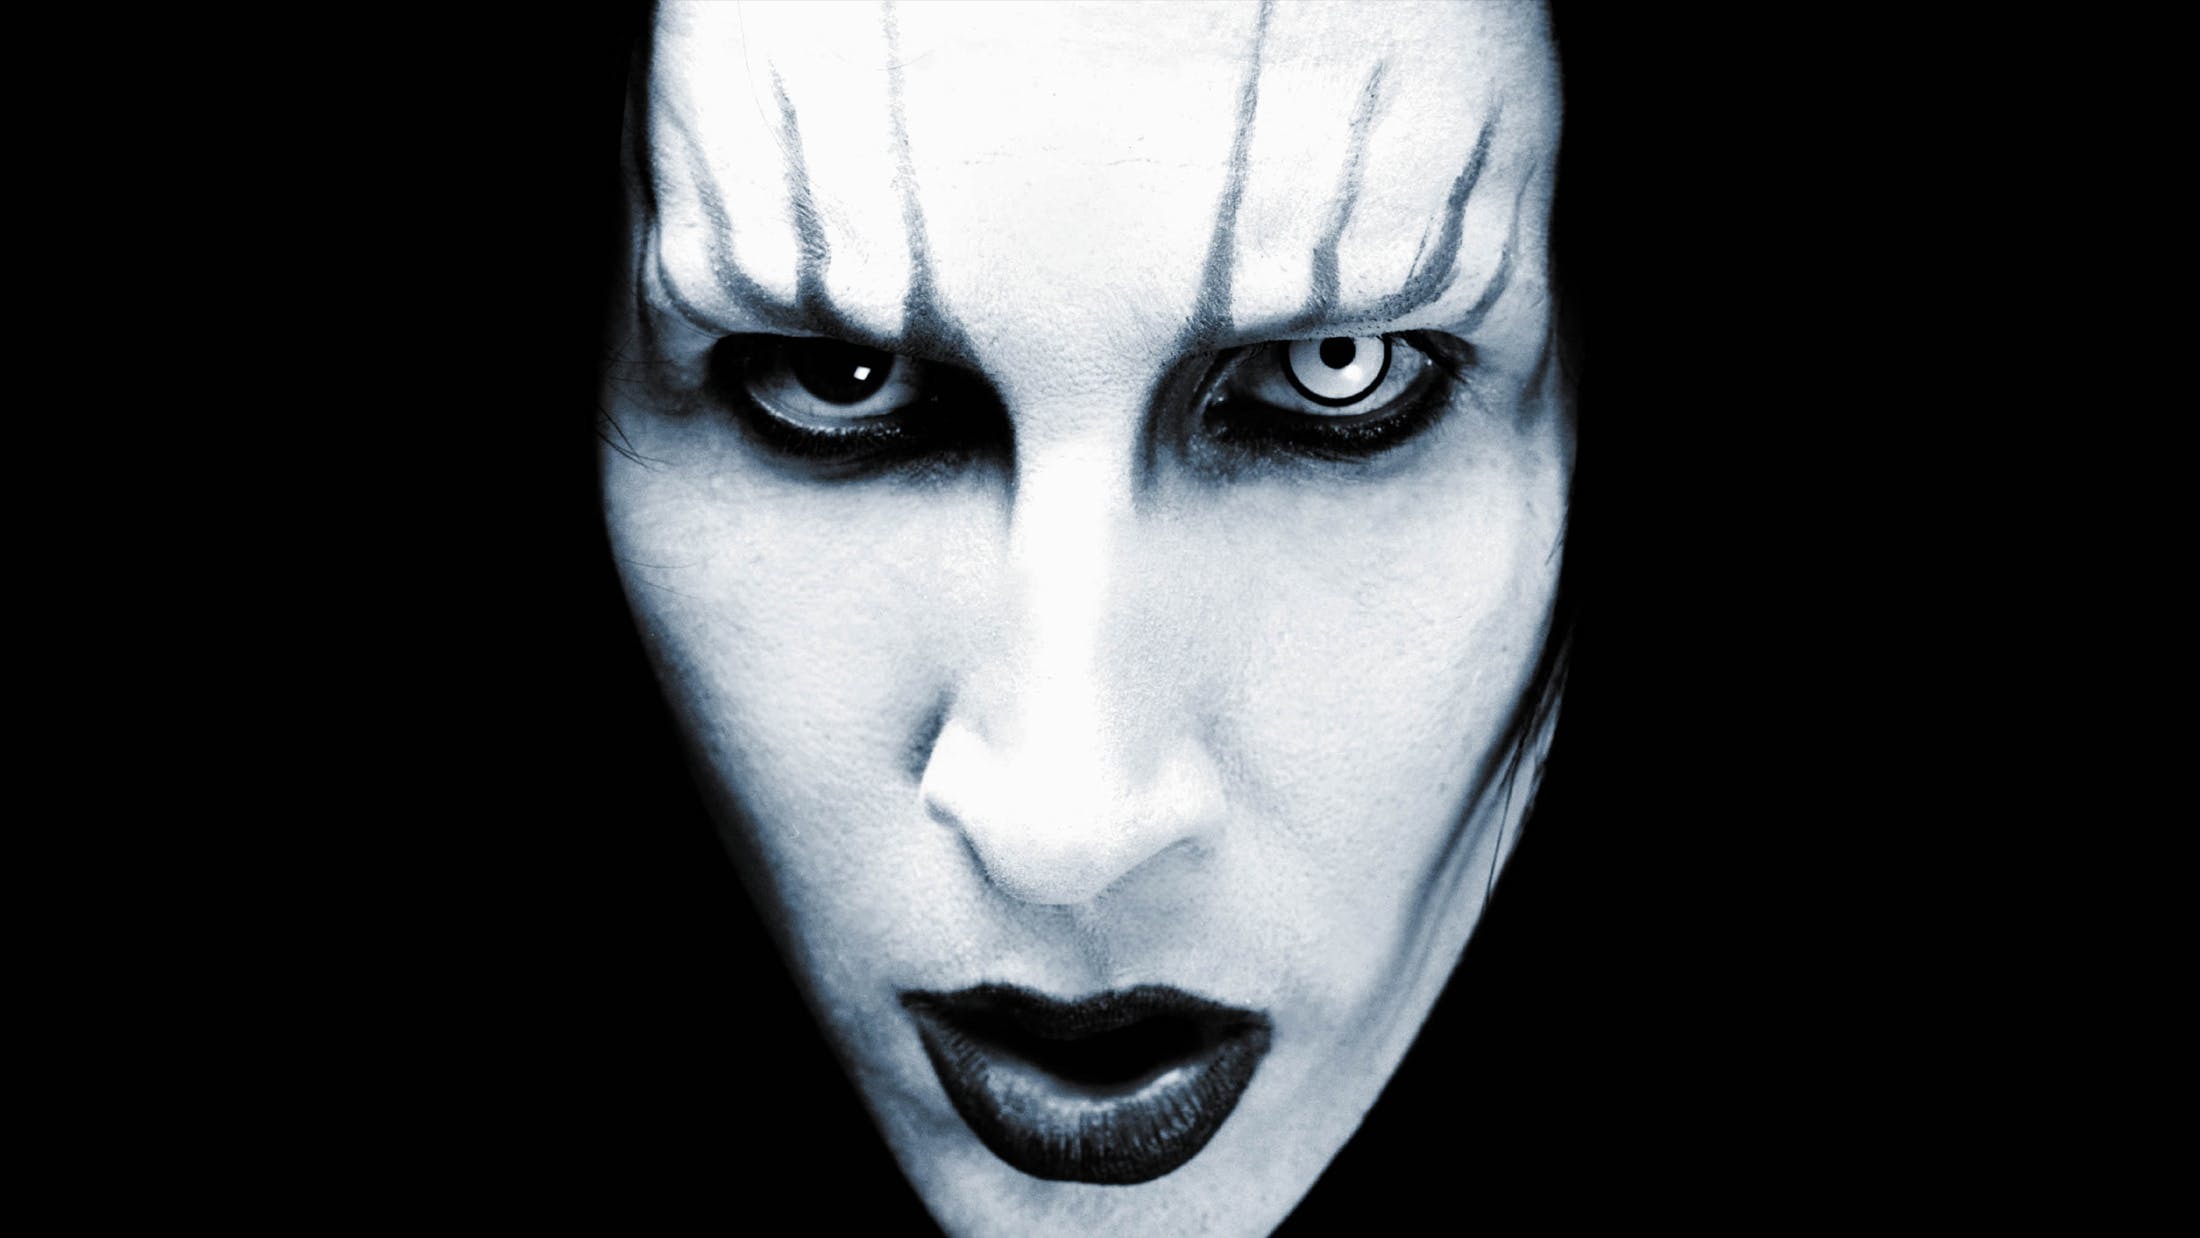 The 20 Greatest Marilyn Manson Songs – Ranked | Kerrang!